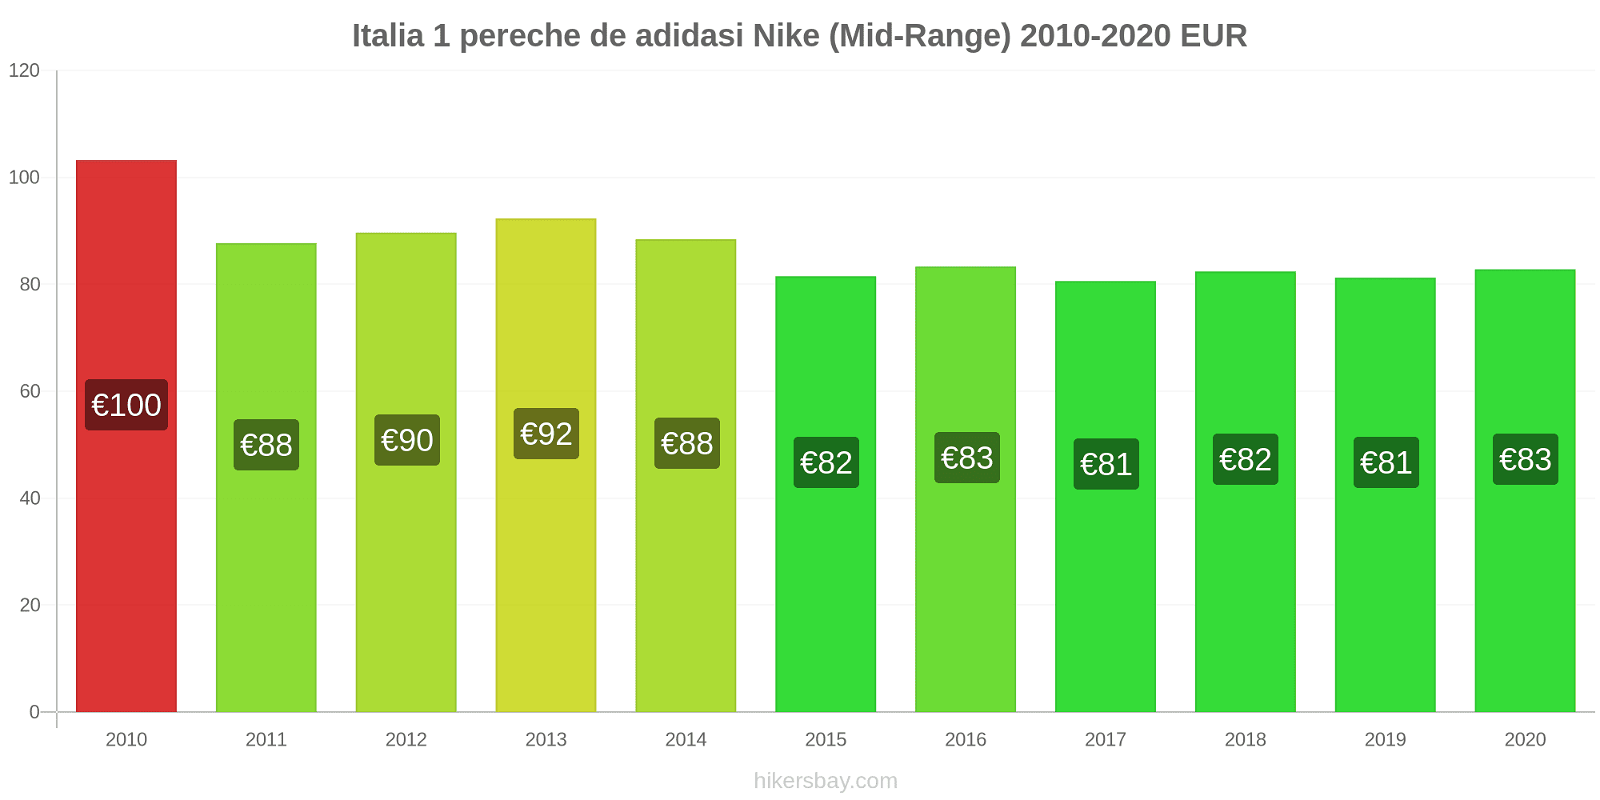 Italia modificări de preț 1 pereche de adidasi Nike (Mid-Range) hikersbay.com